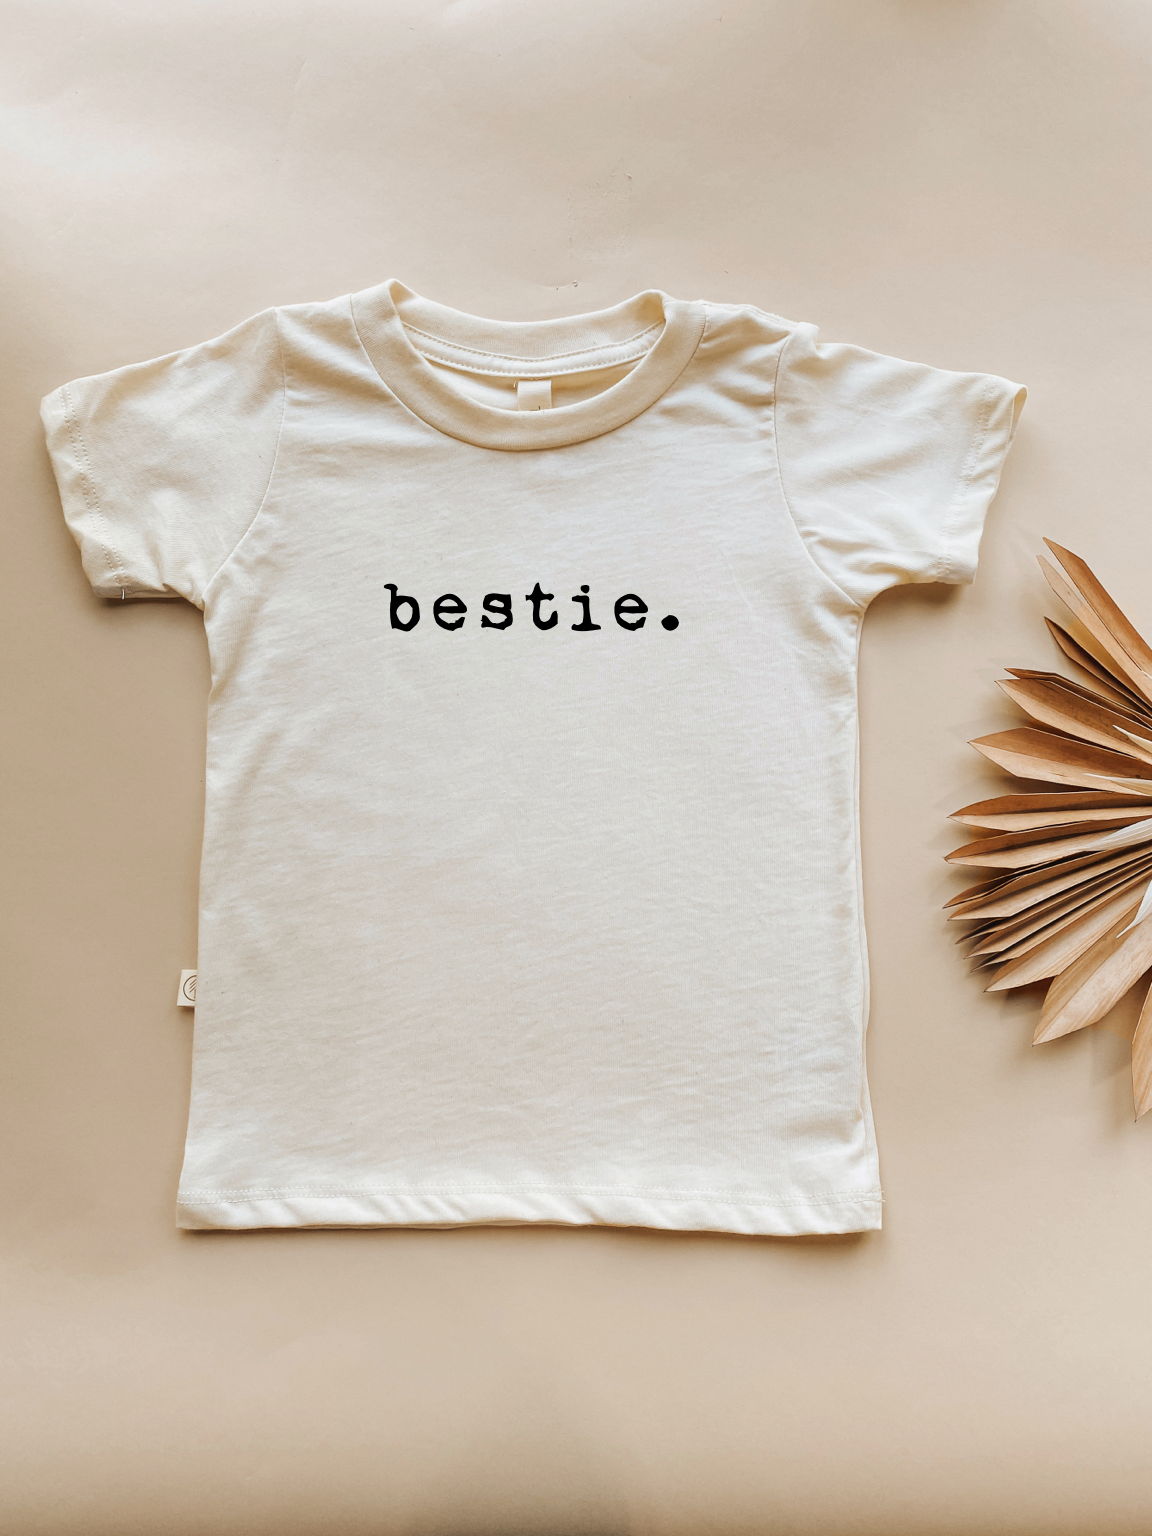 Bestie - Organic Cotton Graphic Kids Tee